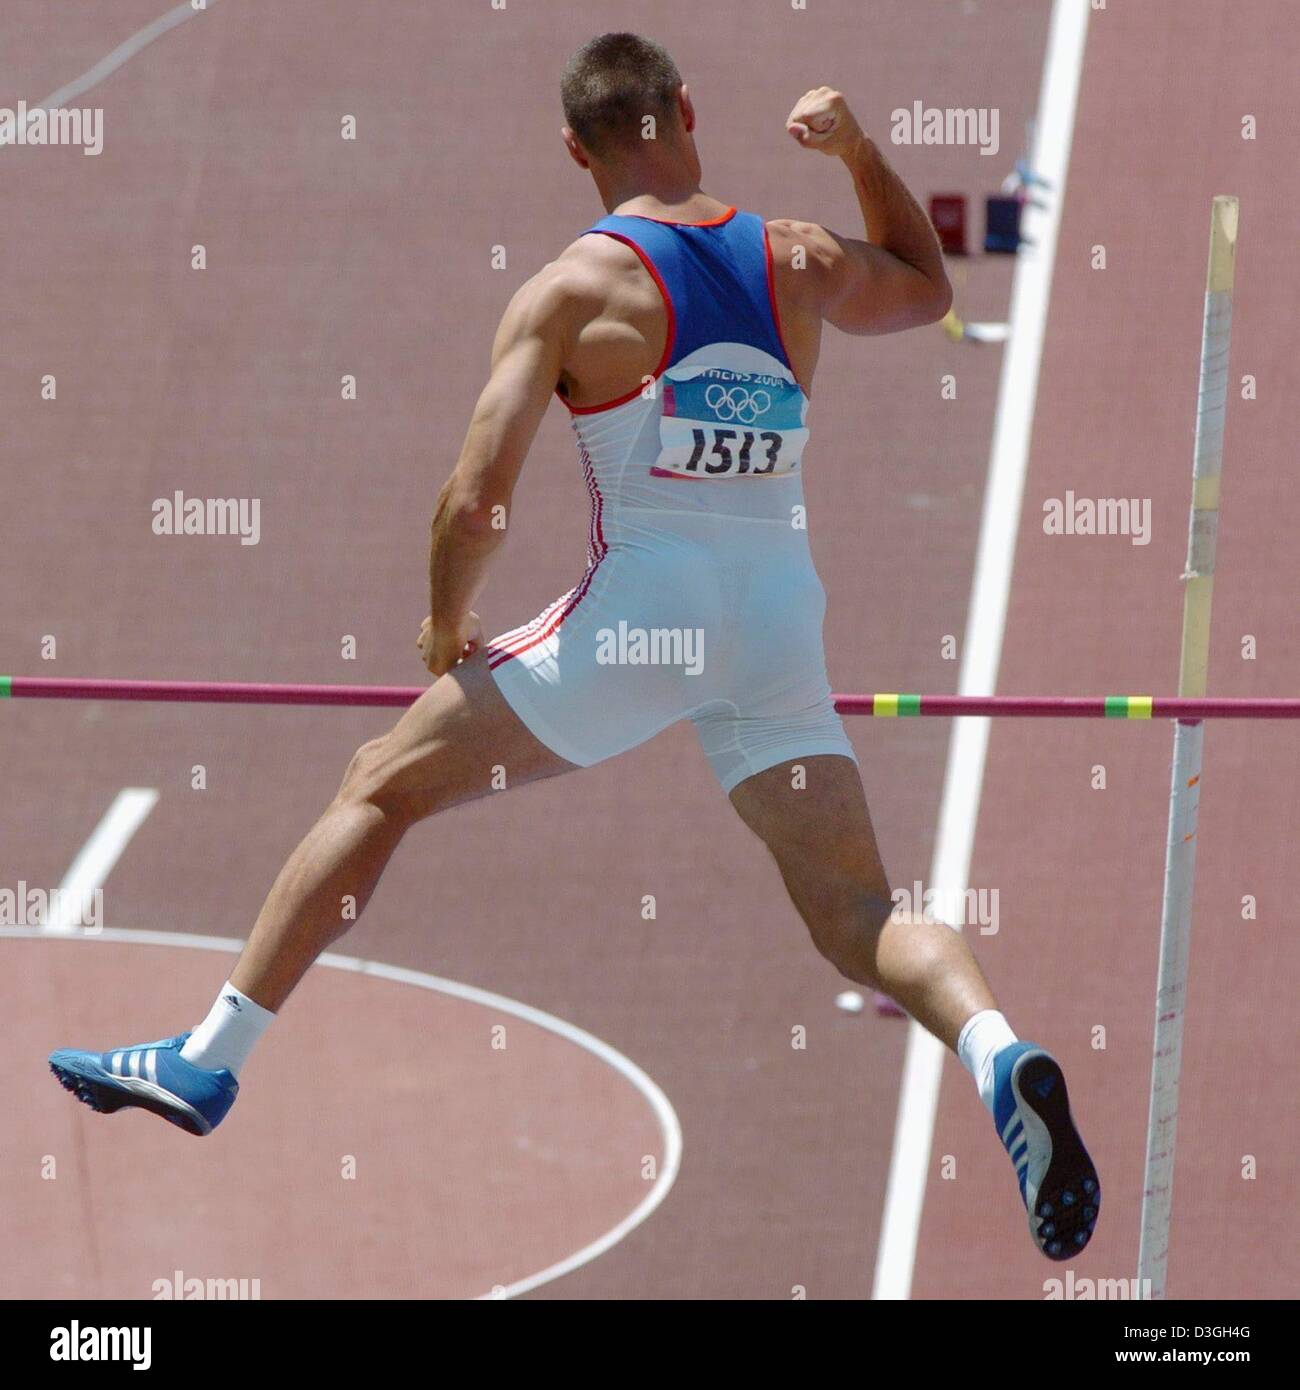 czech athlete world record decathlon